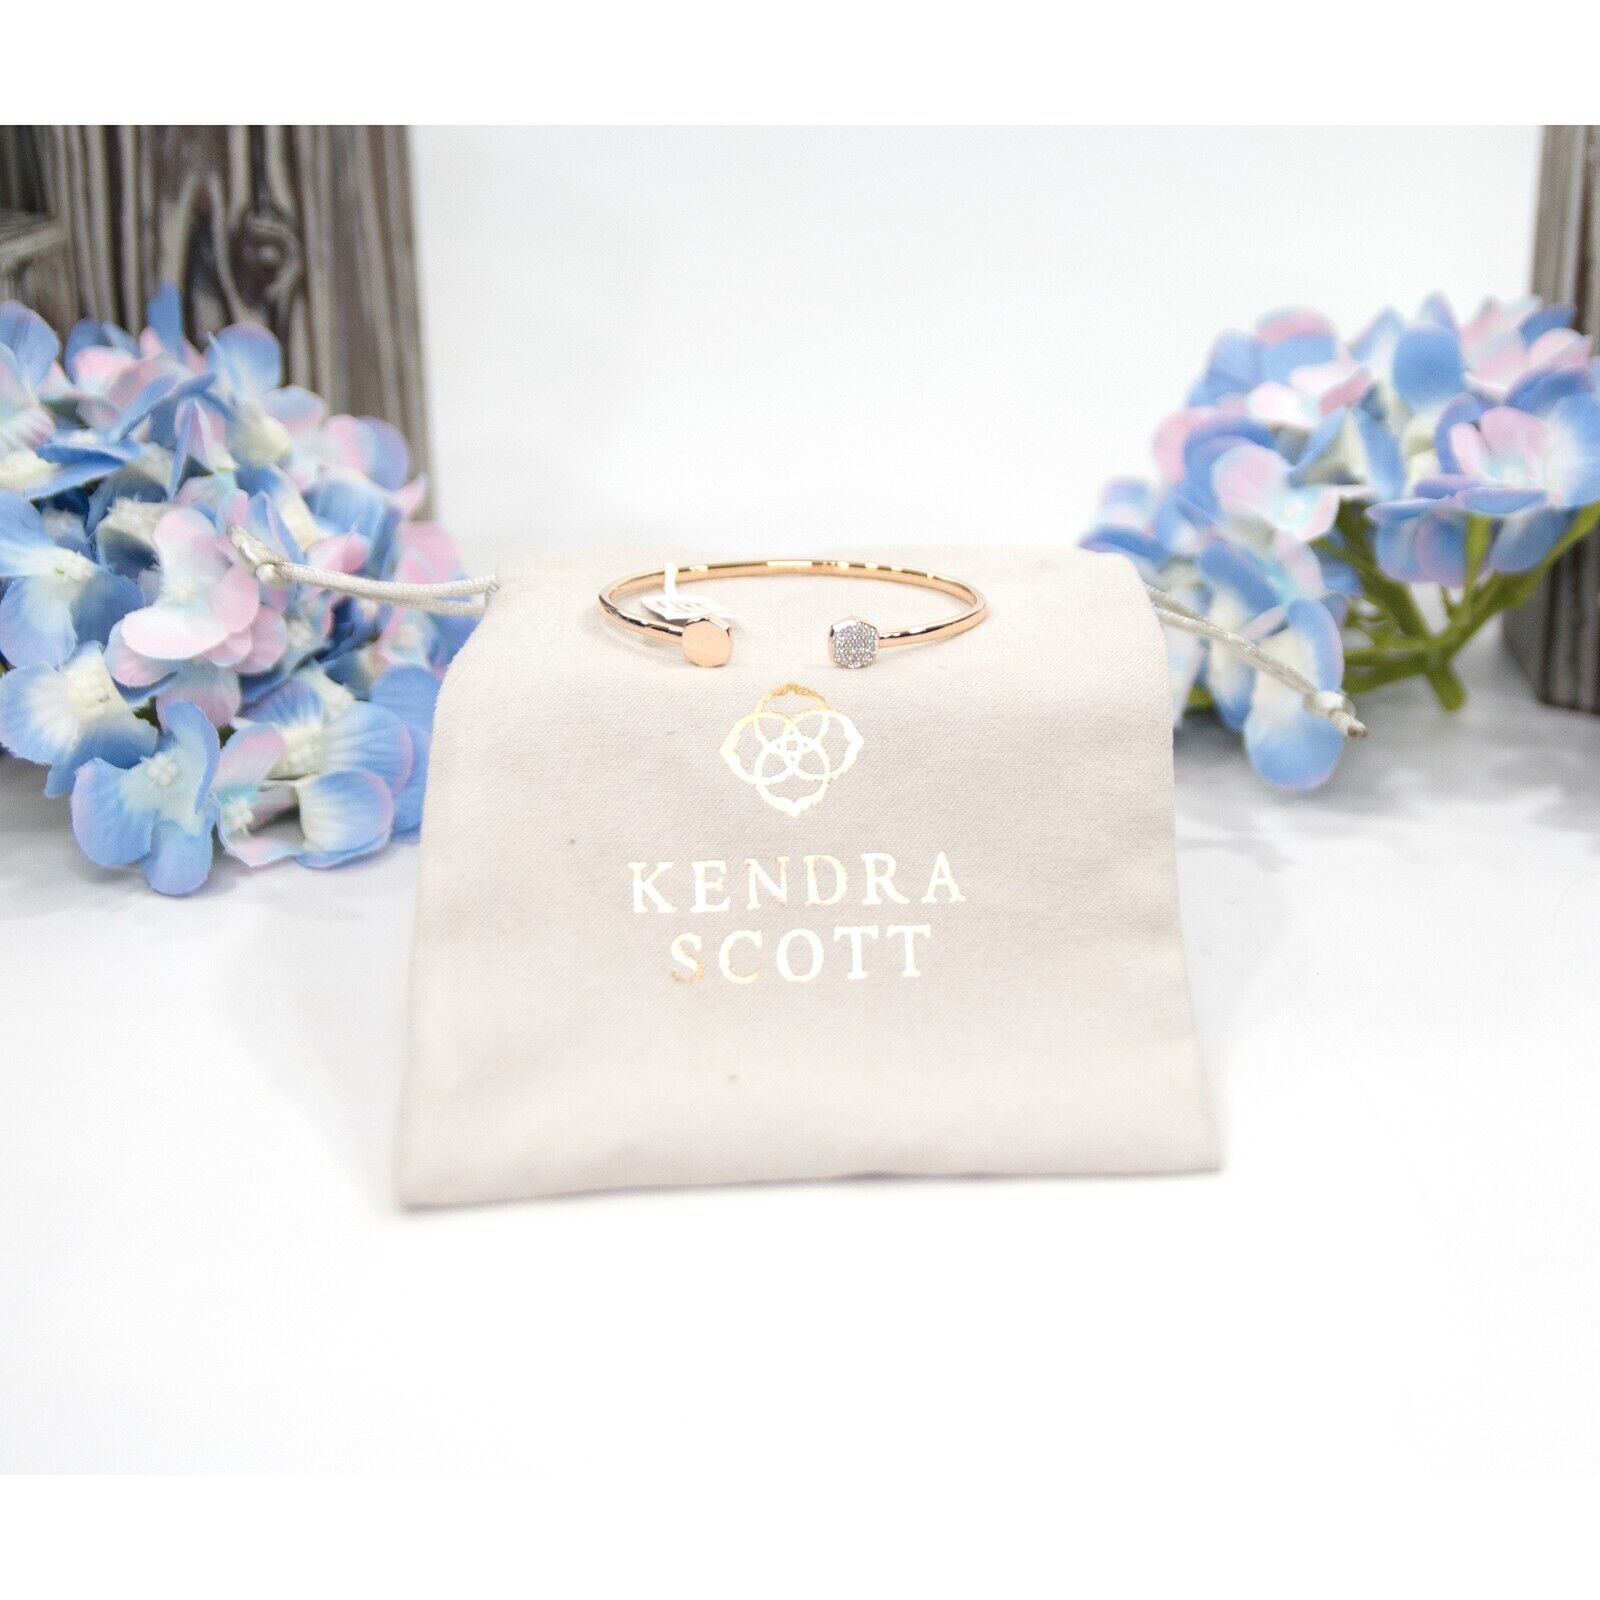 Kendra Scott Davis 18k Rose Gold Vermeil Diamond Open Cuff Bracelet NWT - $222.26